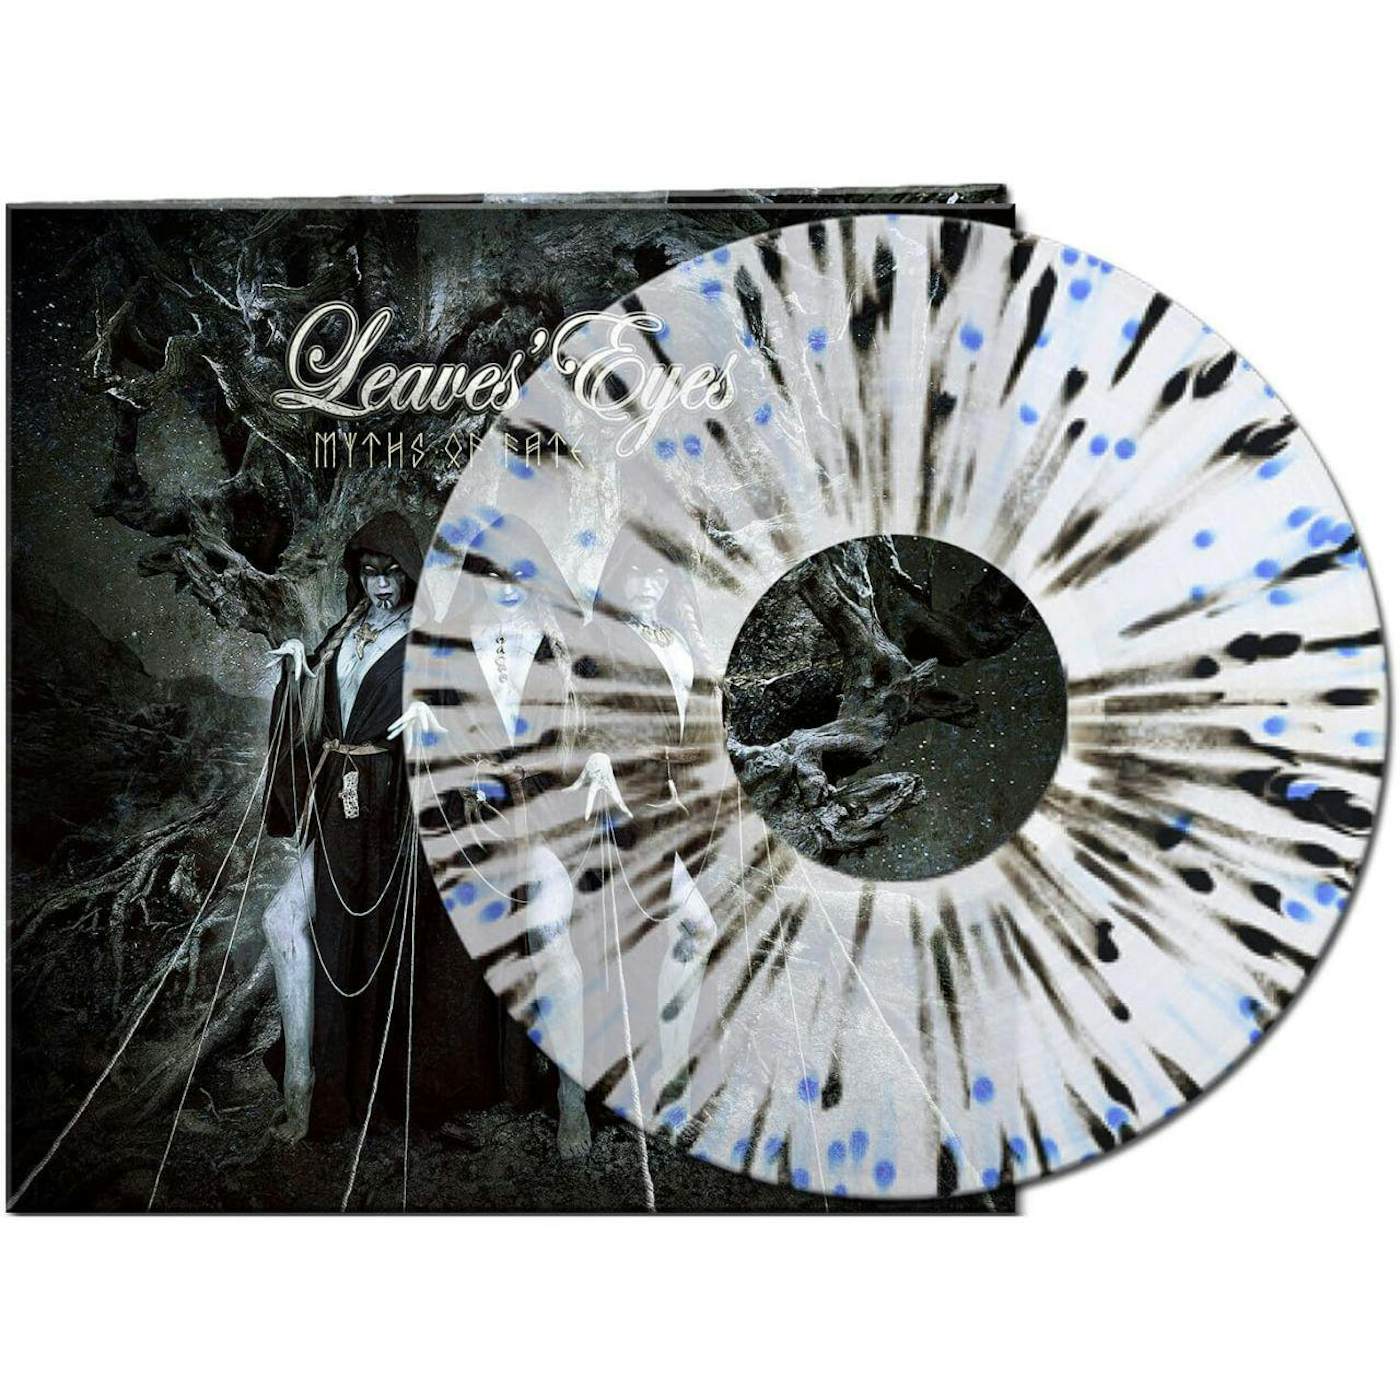 Leaves' Eyes Myths Of Fate (Blue/Black Splatter) Vinyl Record